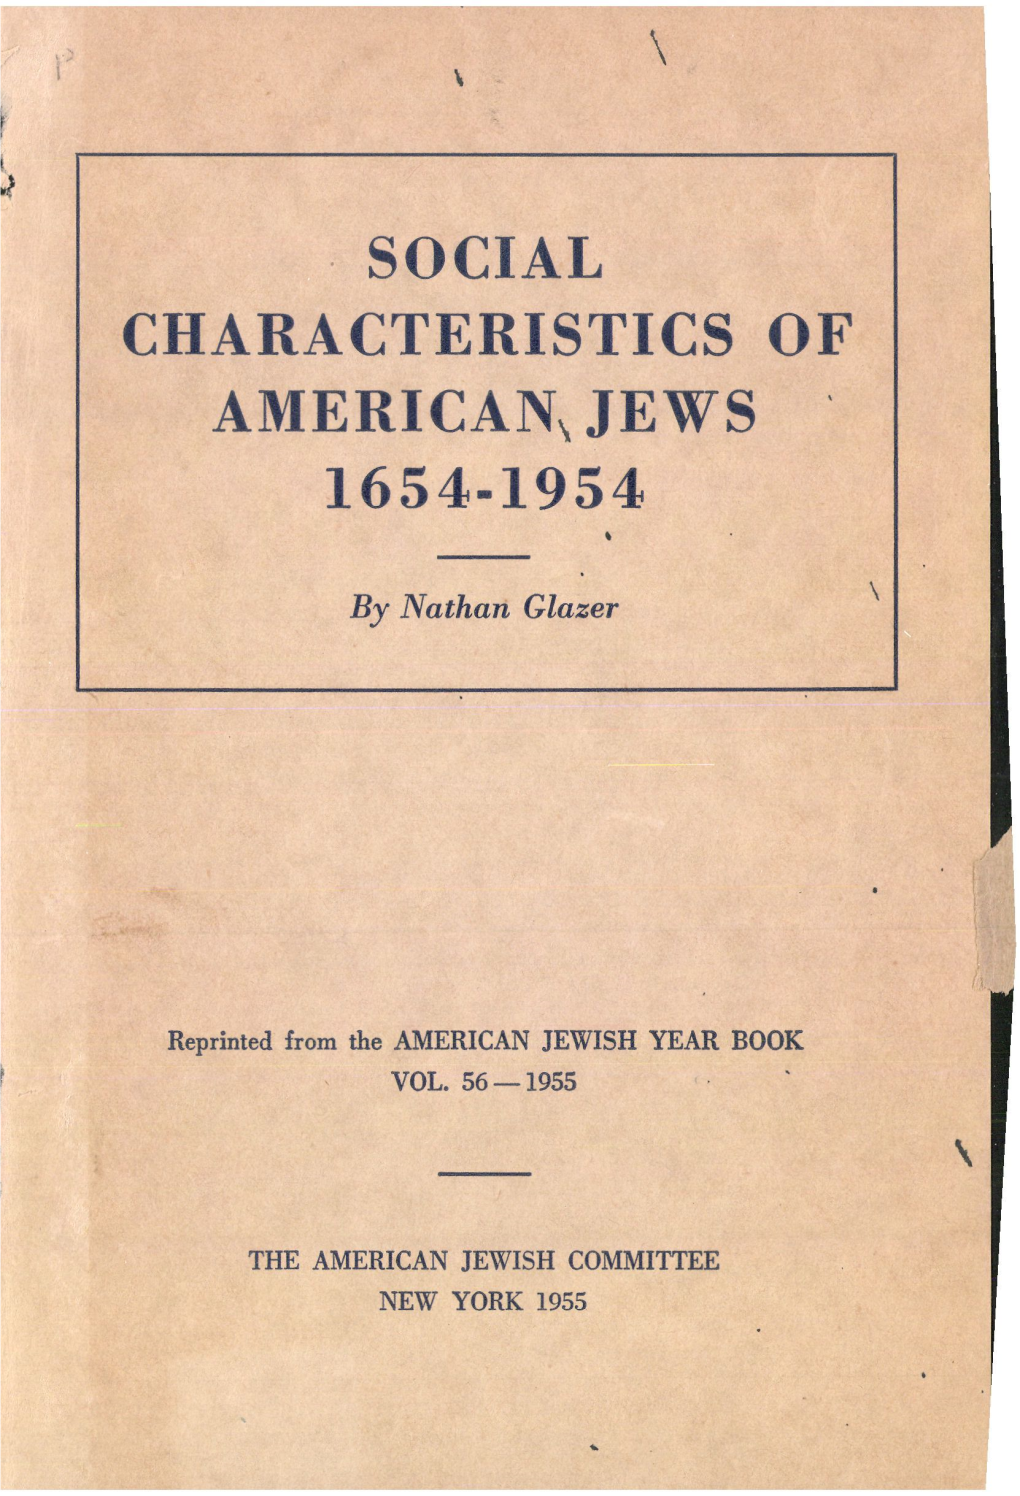 Social Characteristics of American, Jews 1654-1954